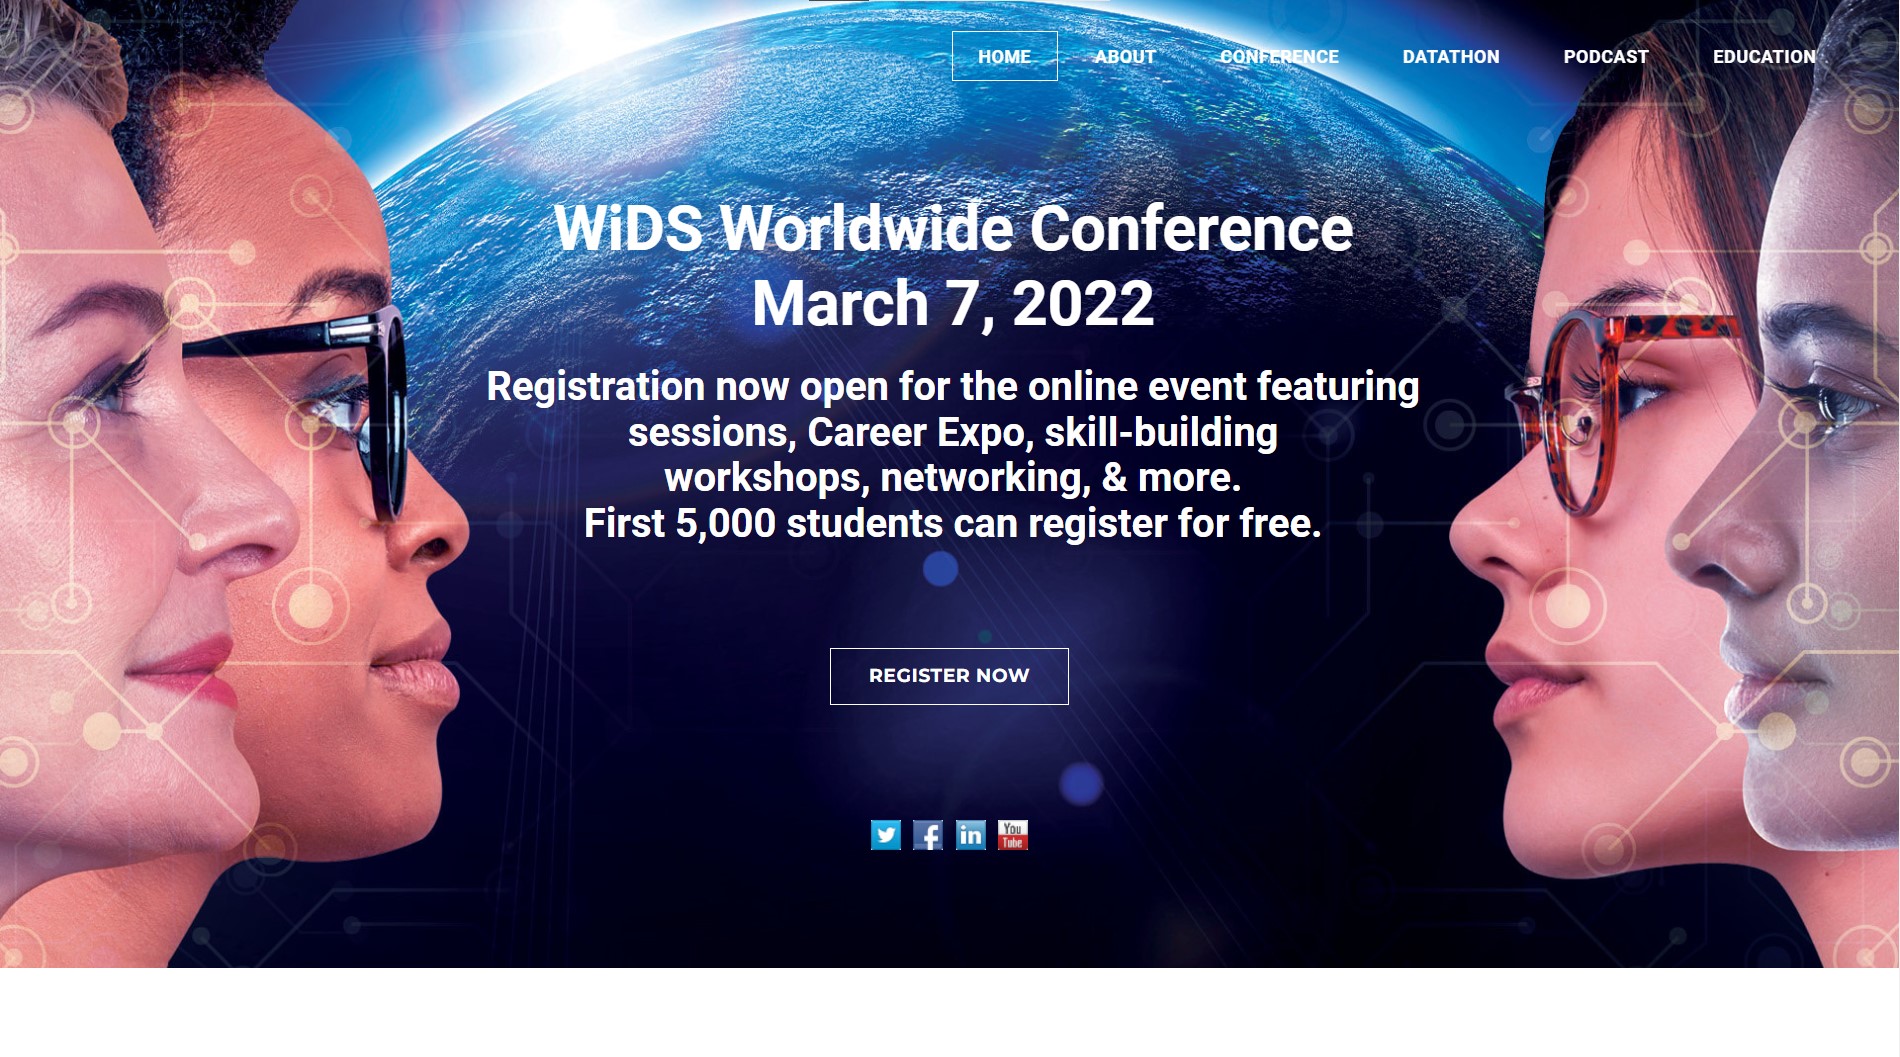 Women in Data Science Worldwide Conference